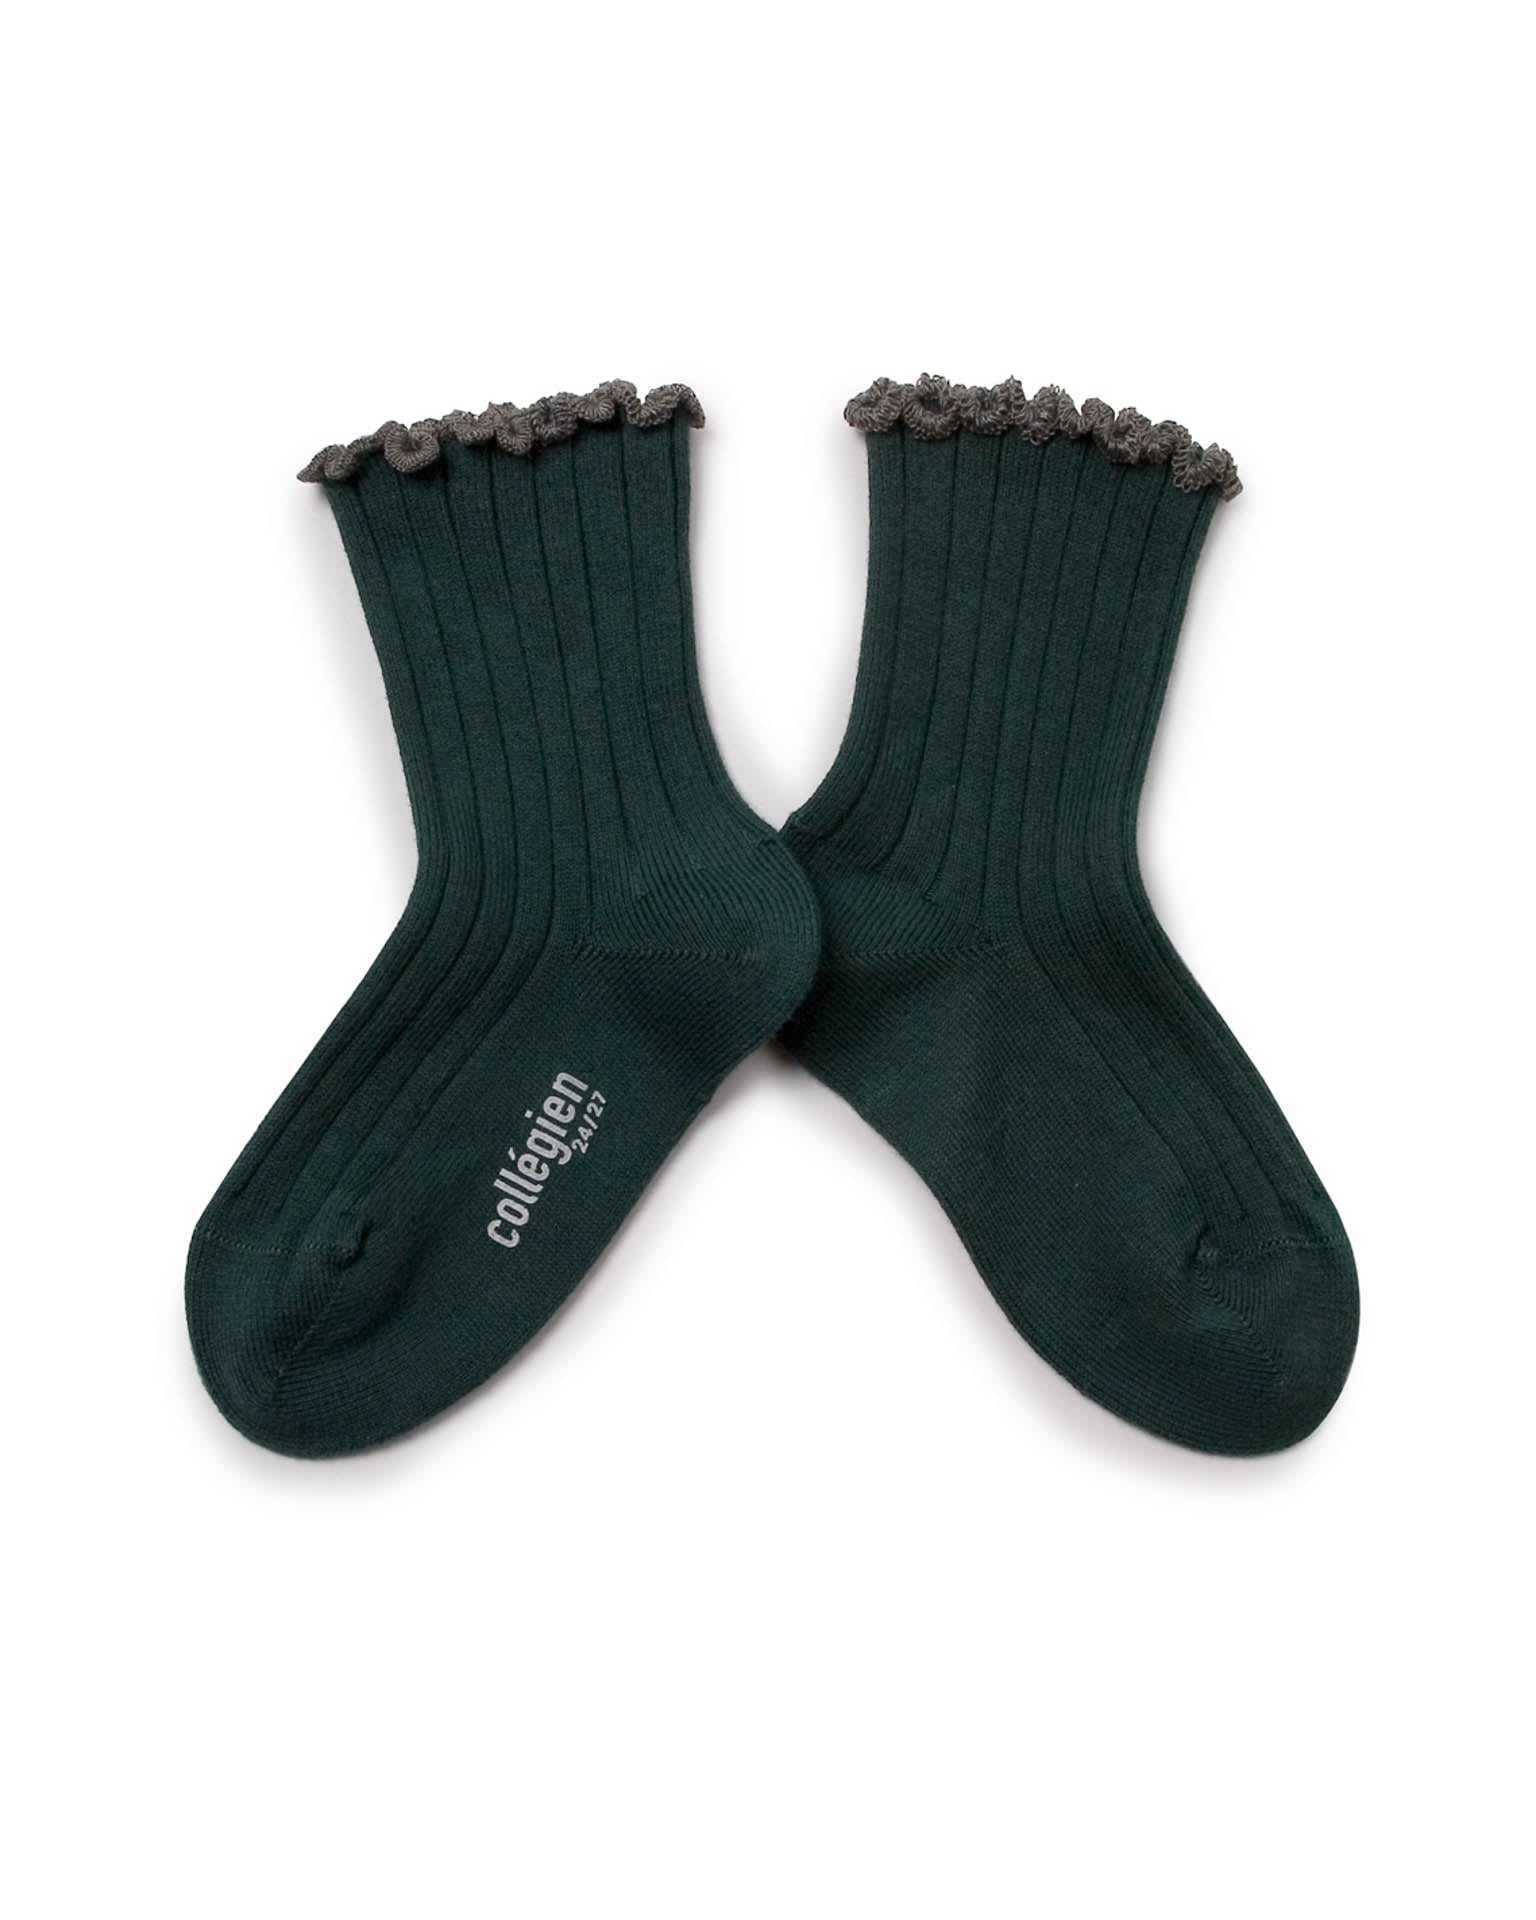 Little collégien accessories delphine ankle socks in vert fôret